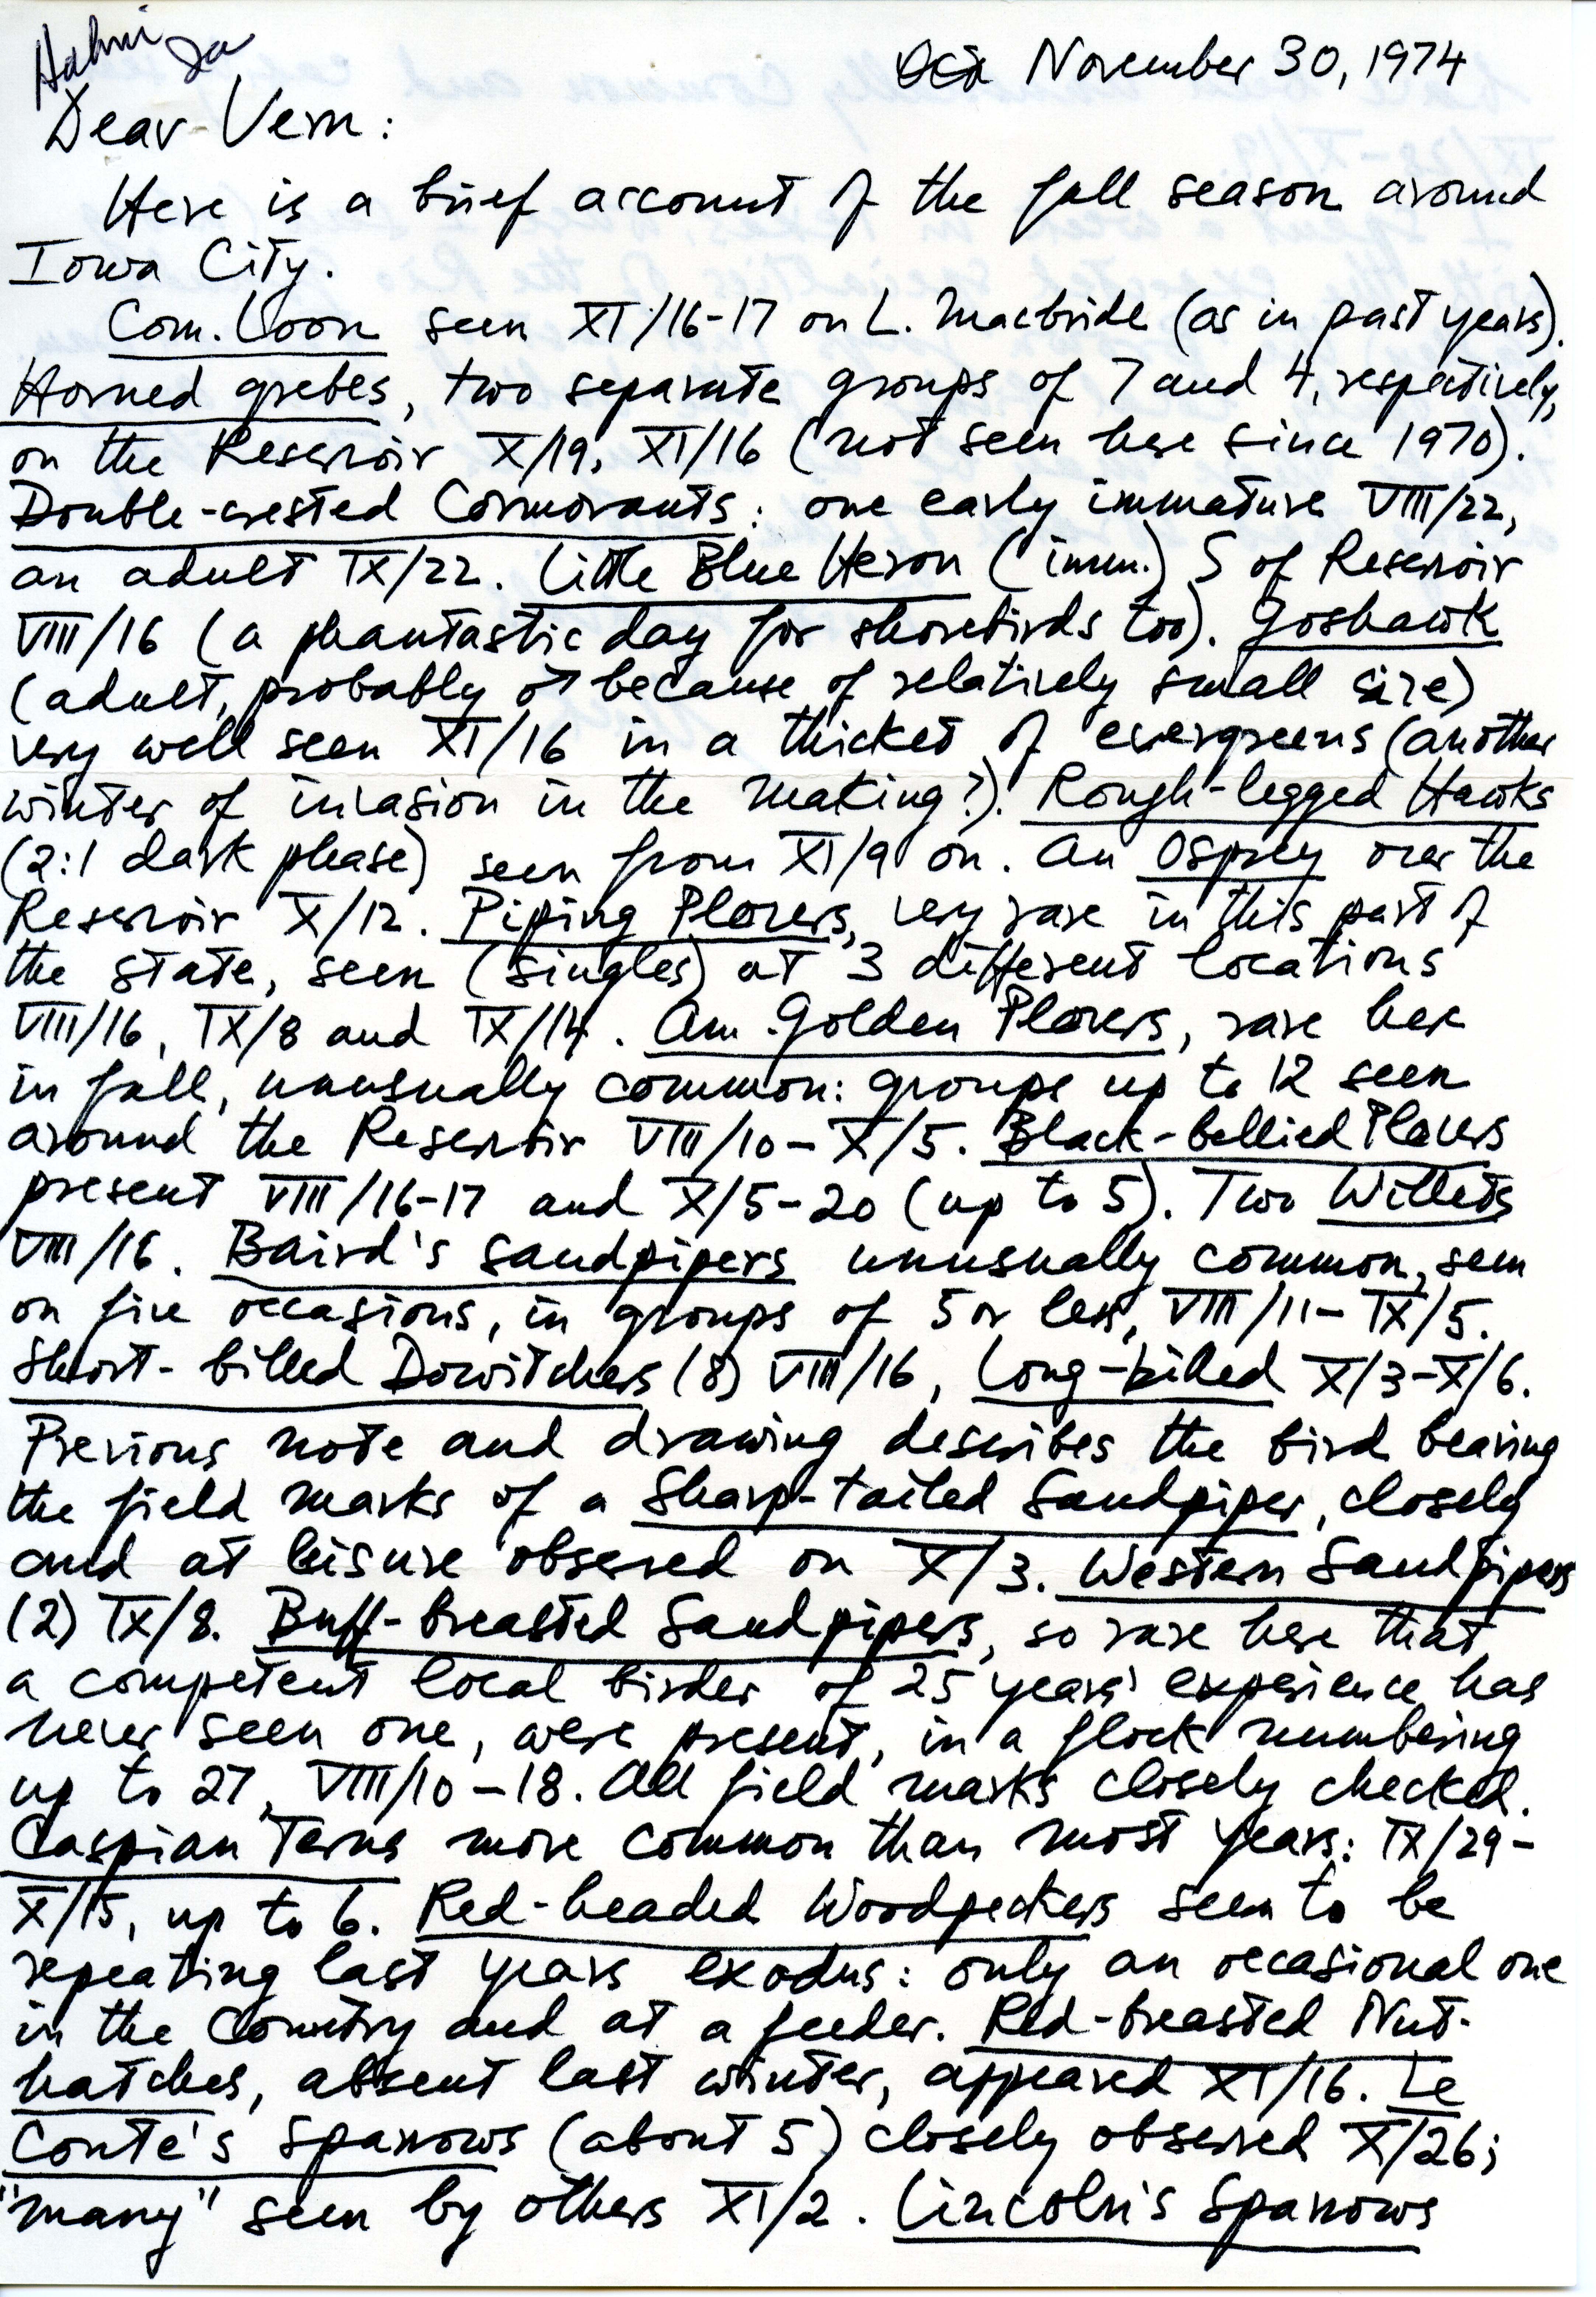 Nicholas S. Halmi letter to Vernon M. Kleen regarding birds sighted around Iowa City during fall 1974, November 30, 1974